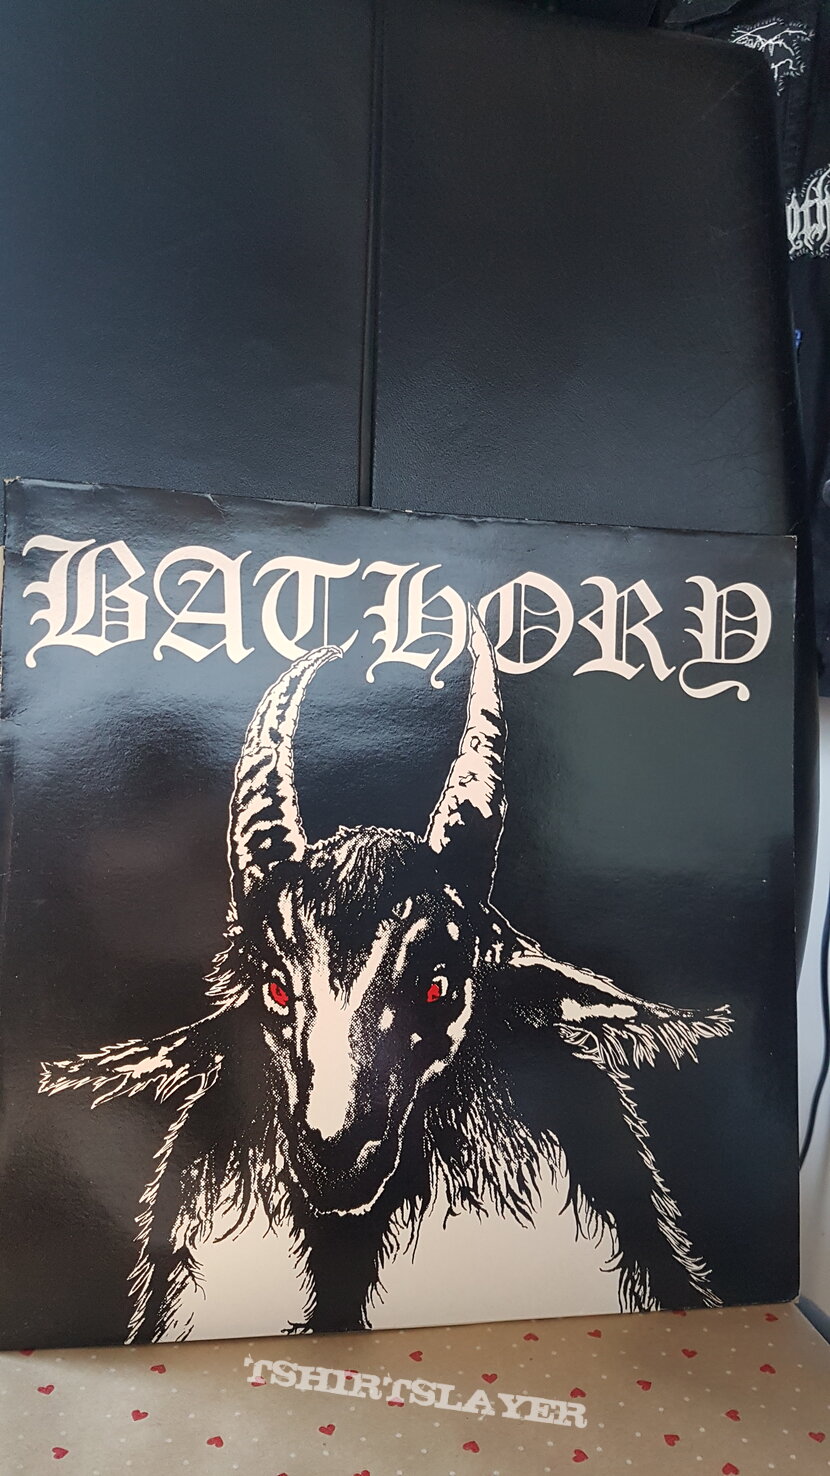 Bathory Bathory